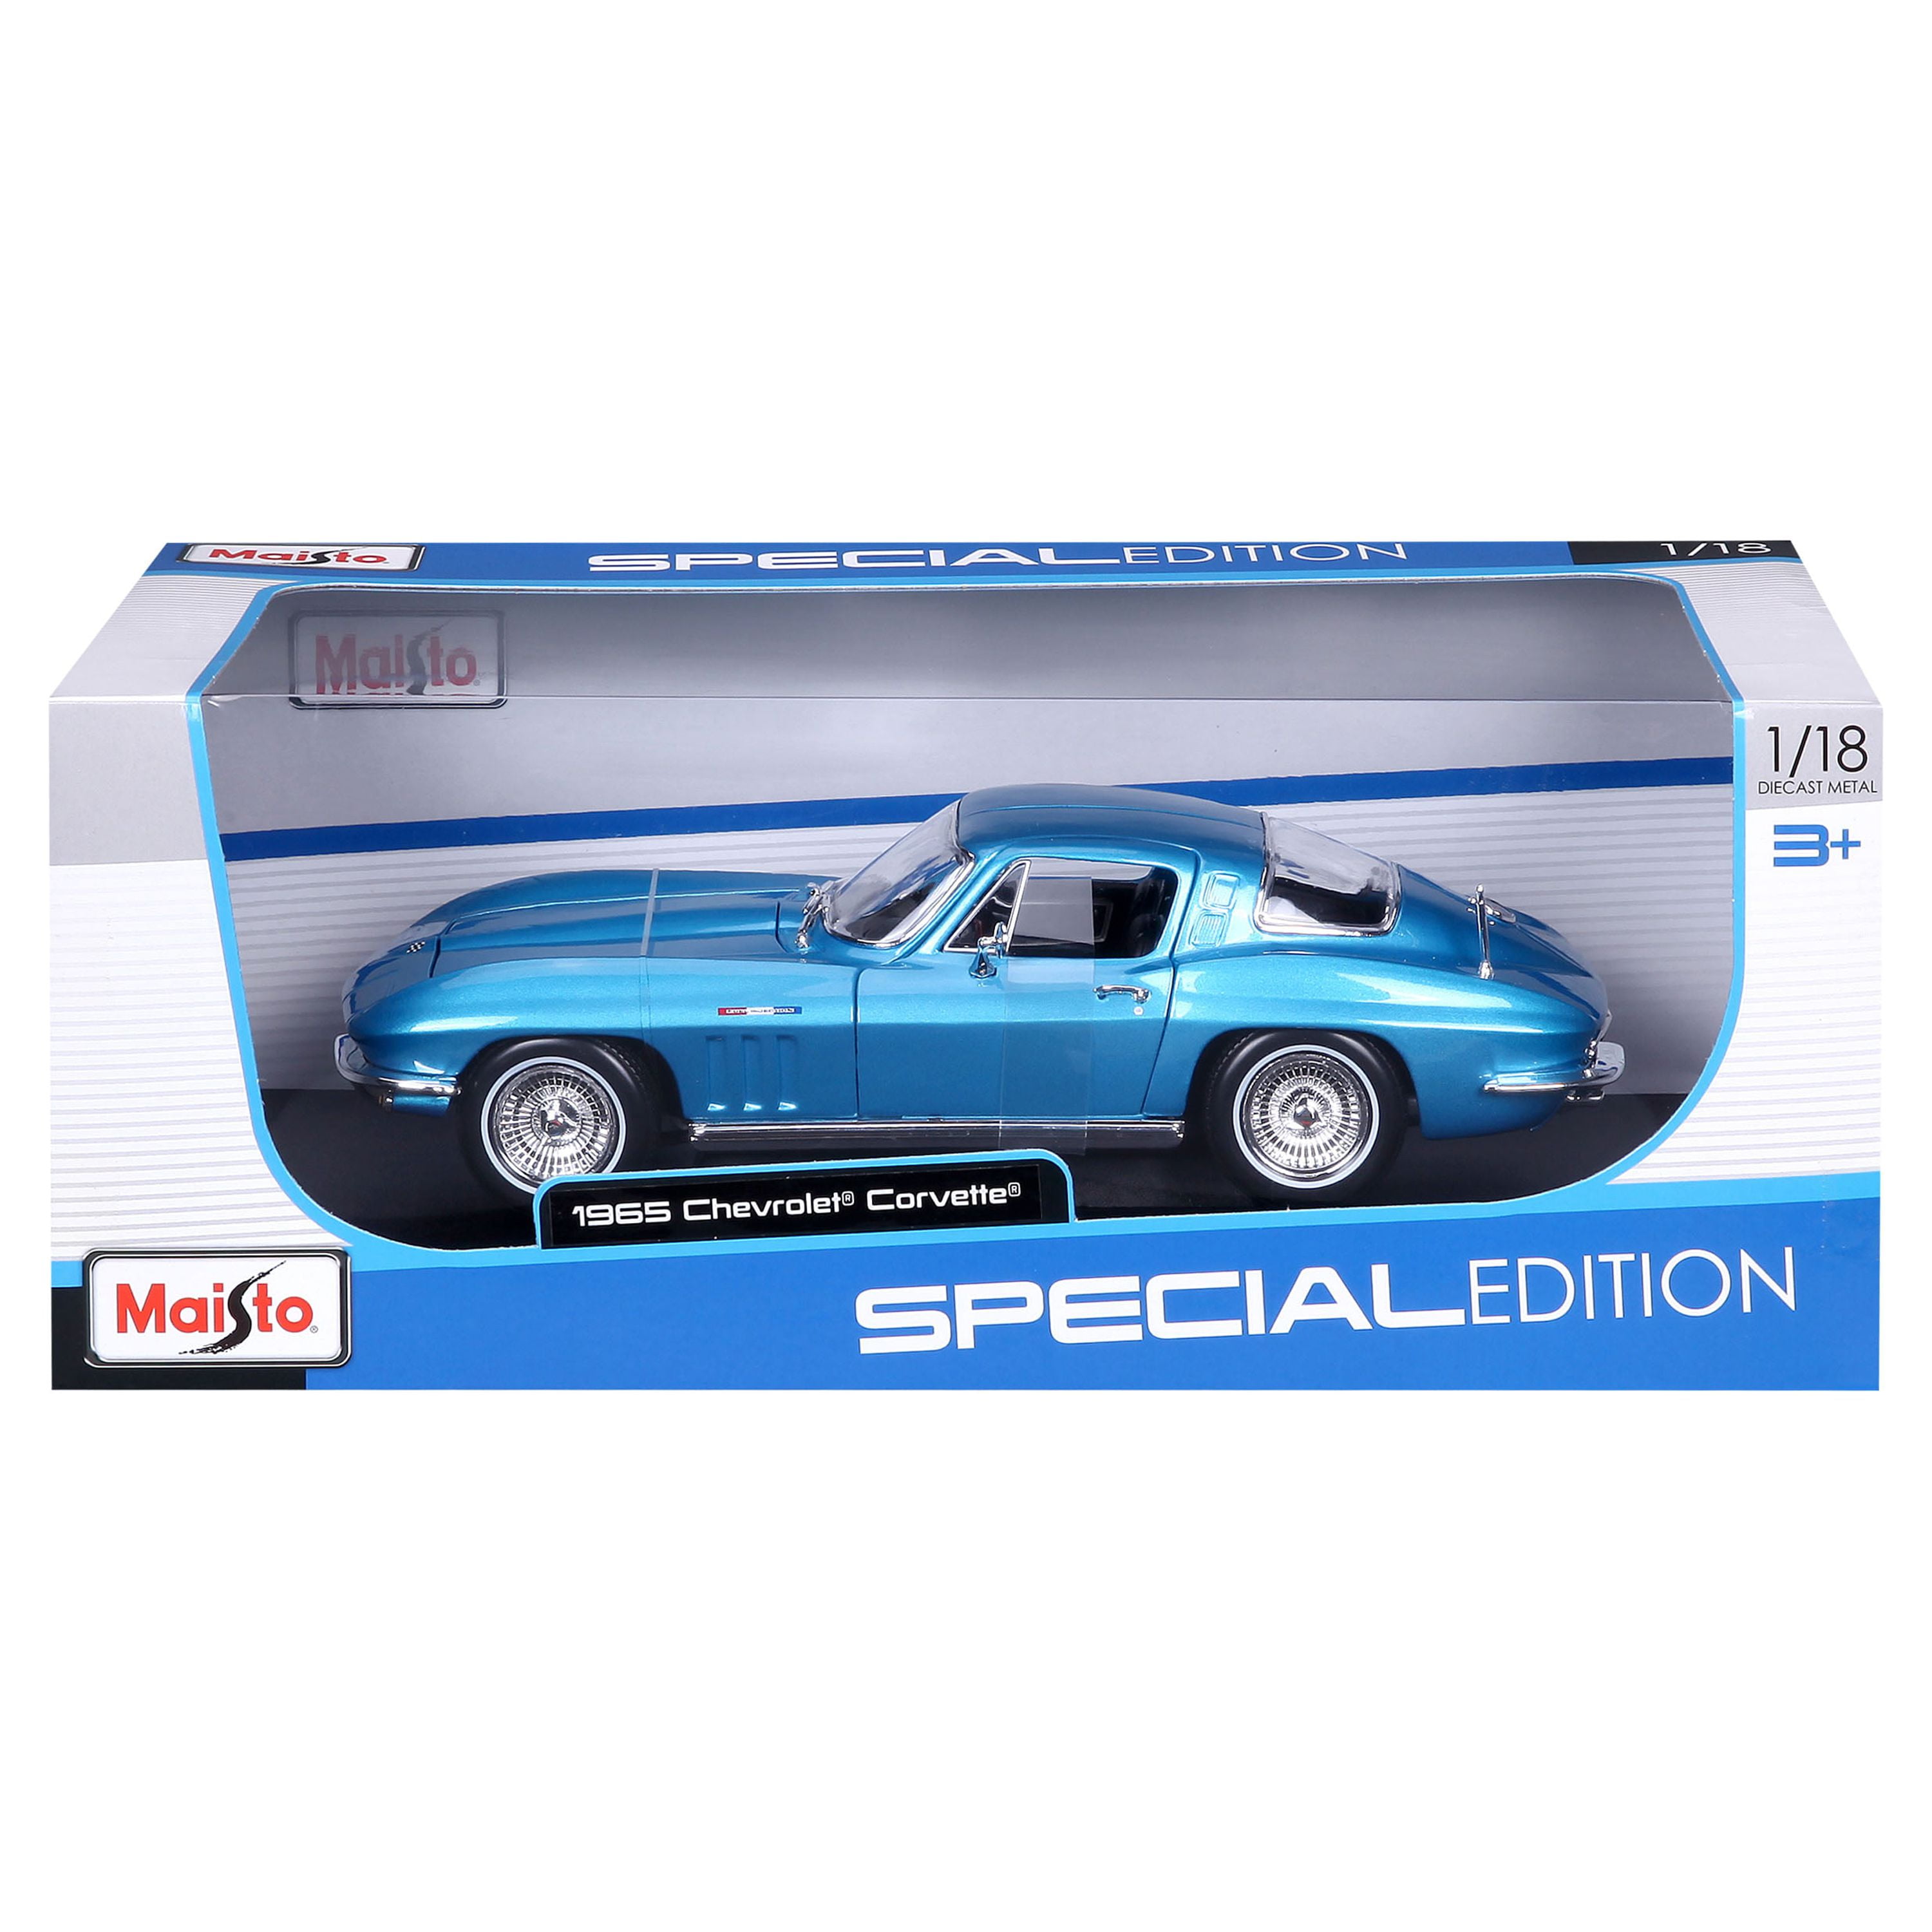 1965 Chevrolet Corvette Silver Special Edition 1/18 Diecast Model Car by  Maisto